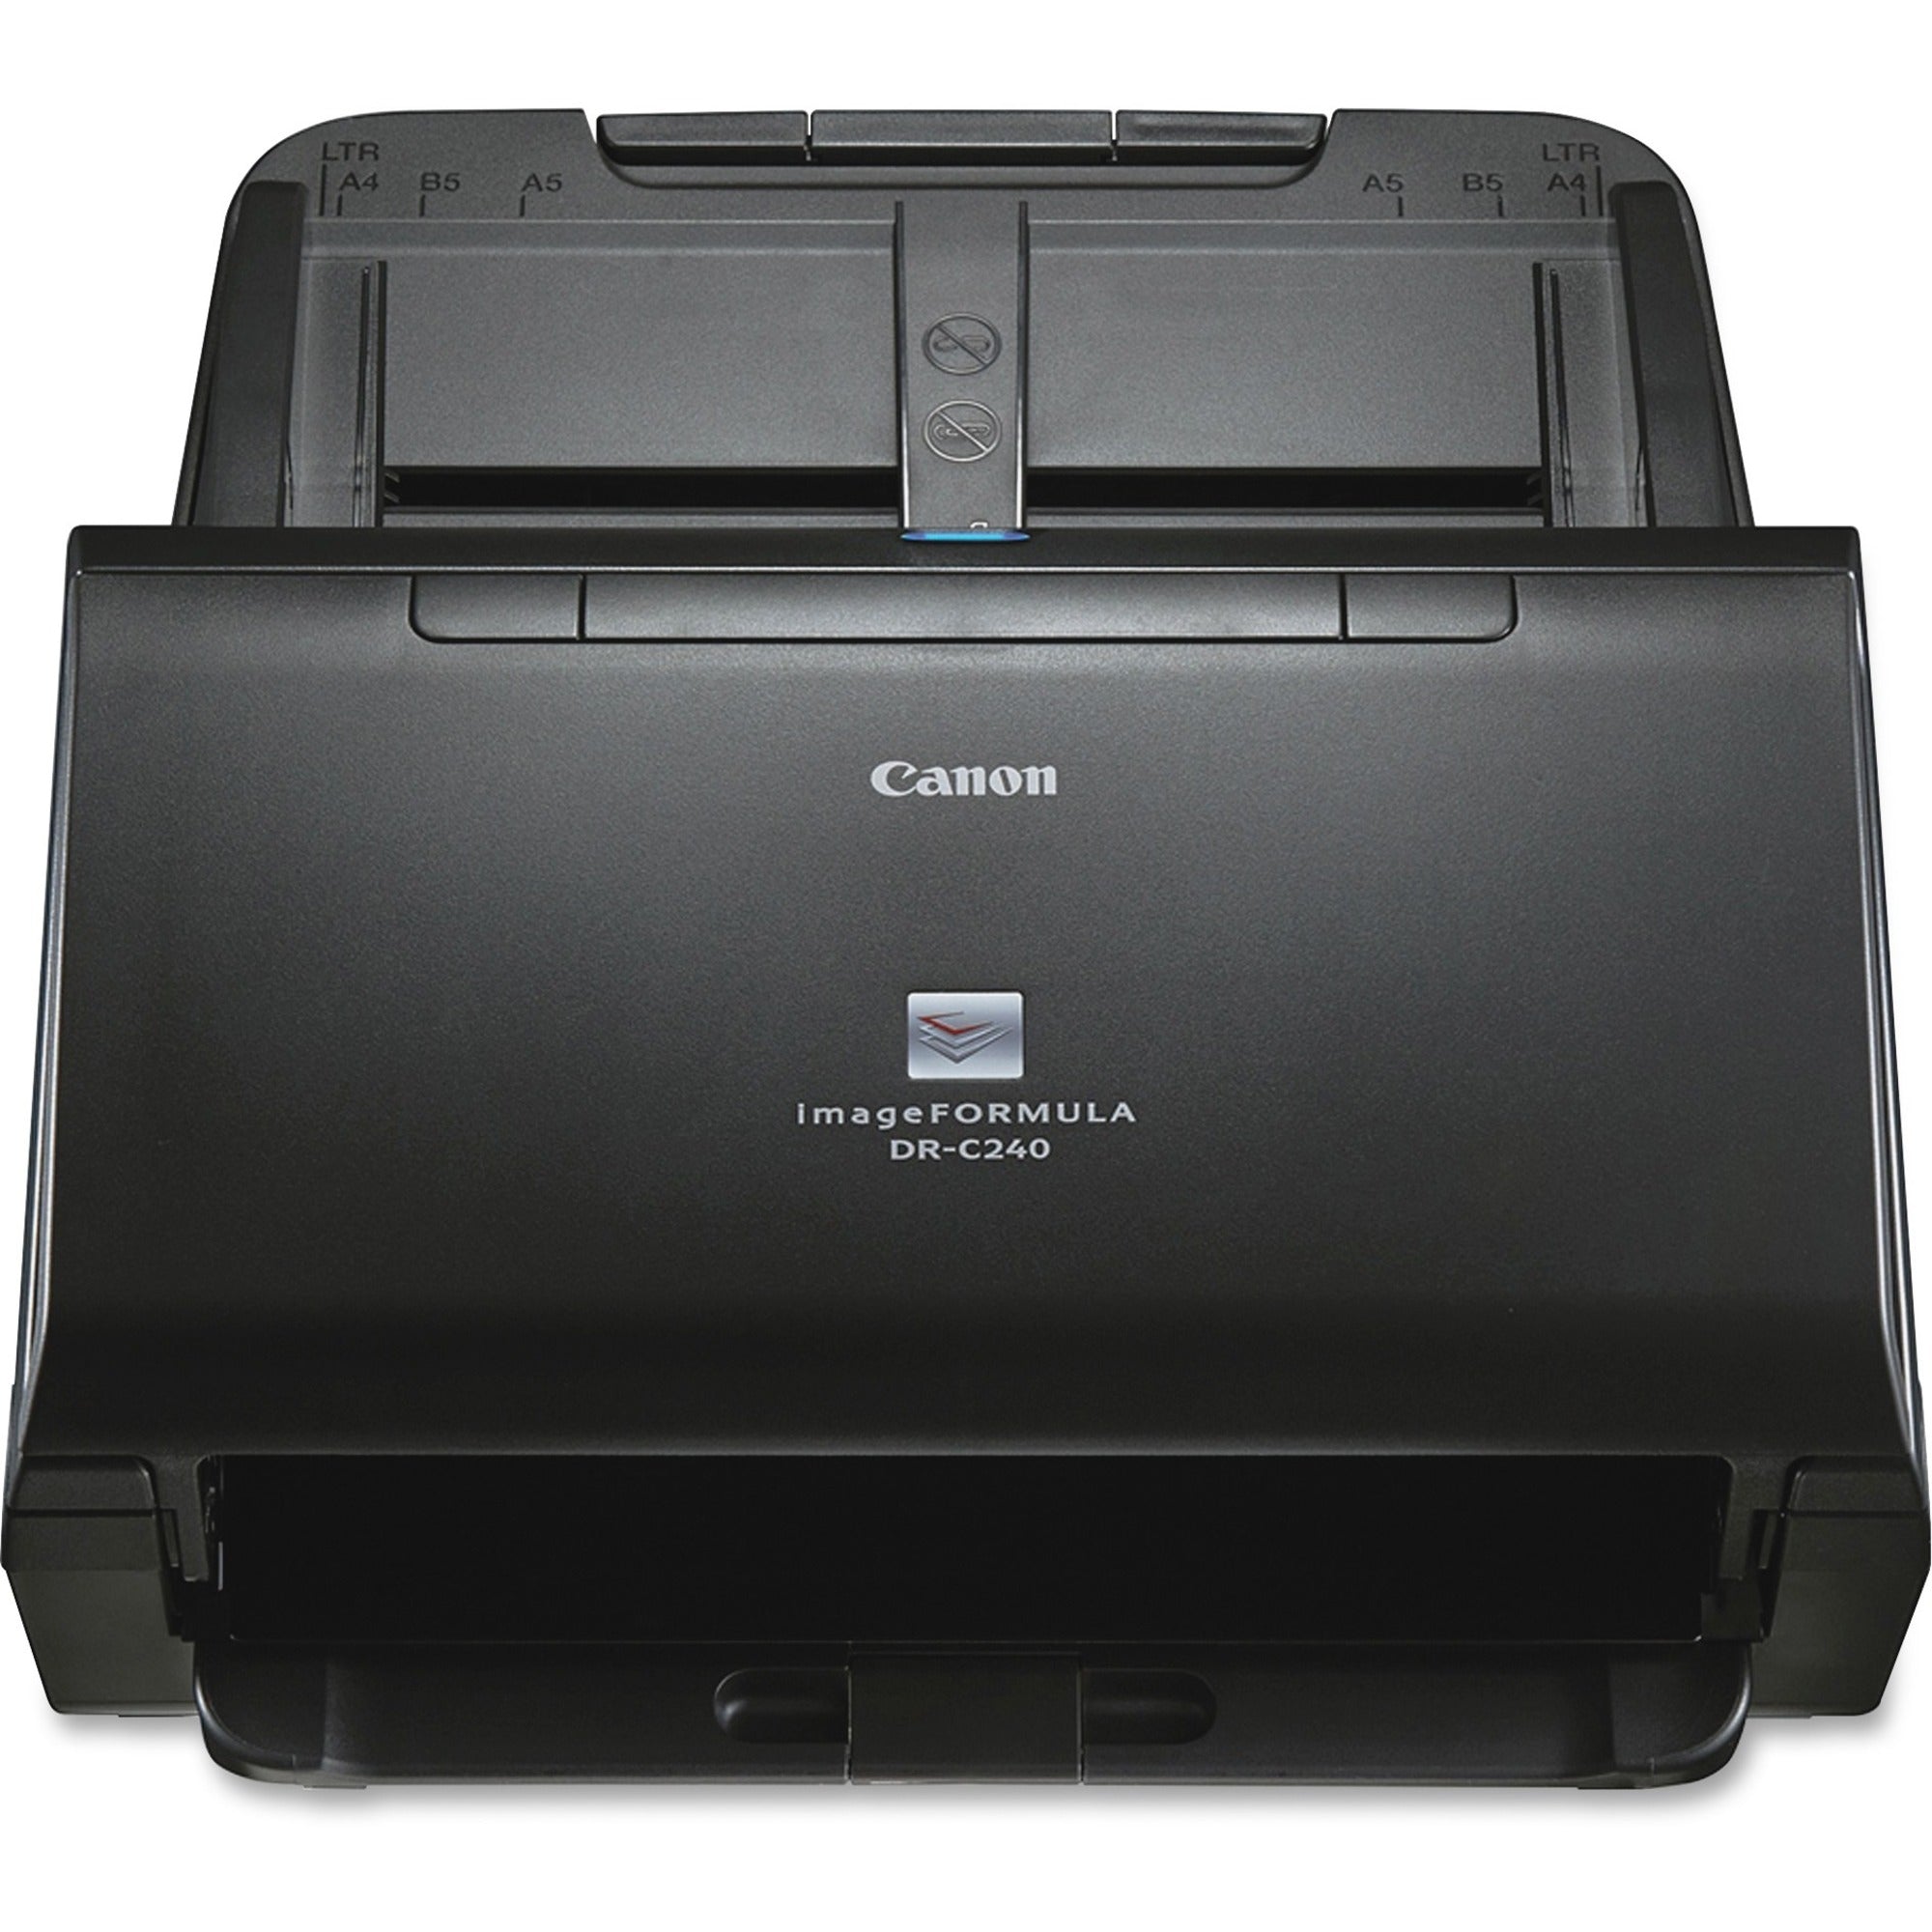 canon-imageformula-dr-c240-sheetfed-scanner-600-dpi-optical-24-bit-color-8-bit-grayscale-45-ppm-mono-30-ppm-color-duplex-scanning-usb_cnmdrc240 - 1